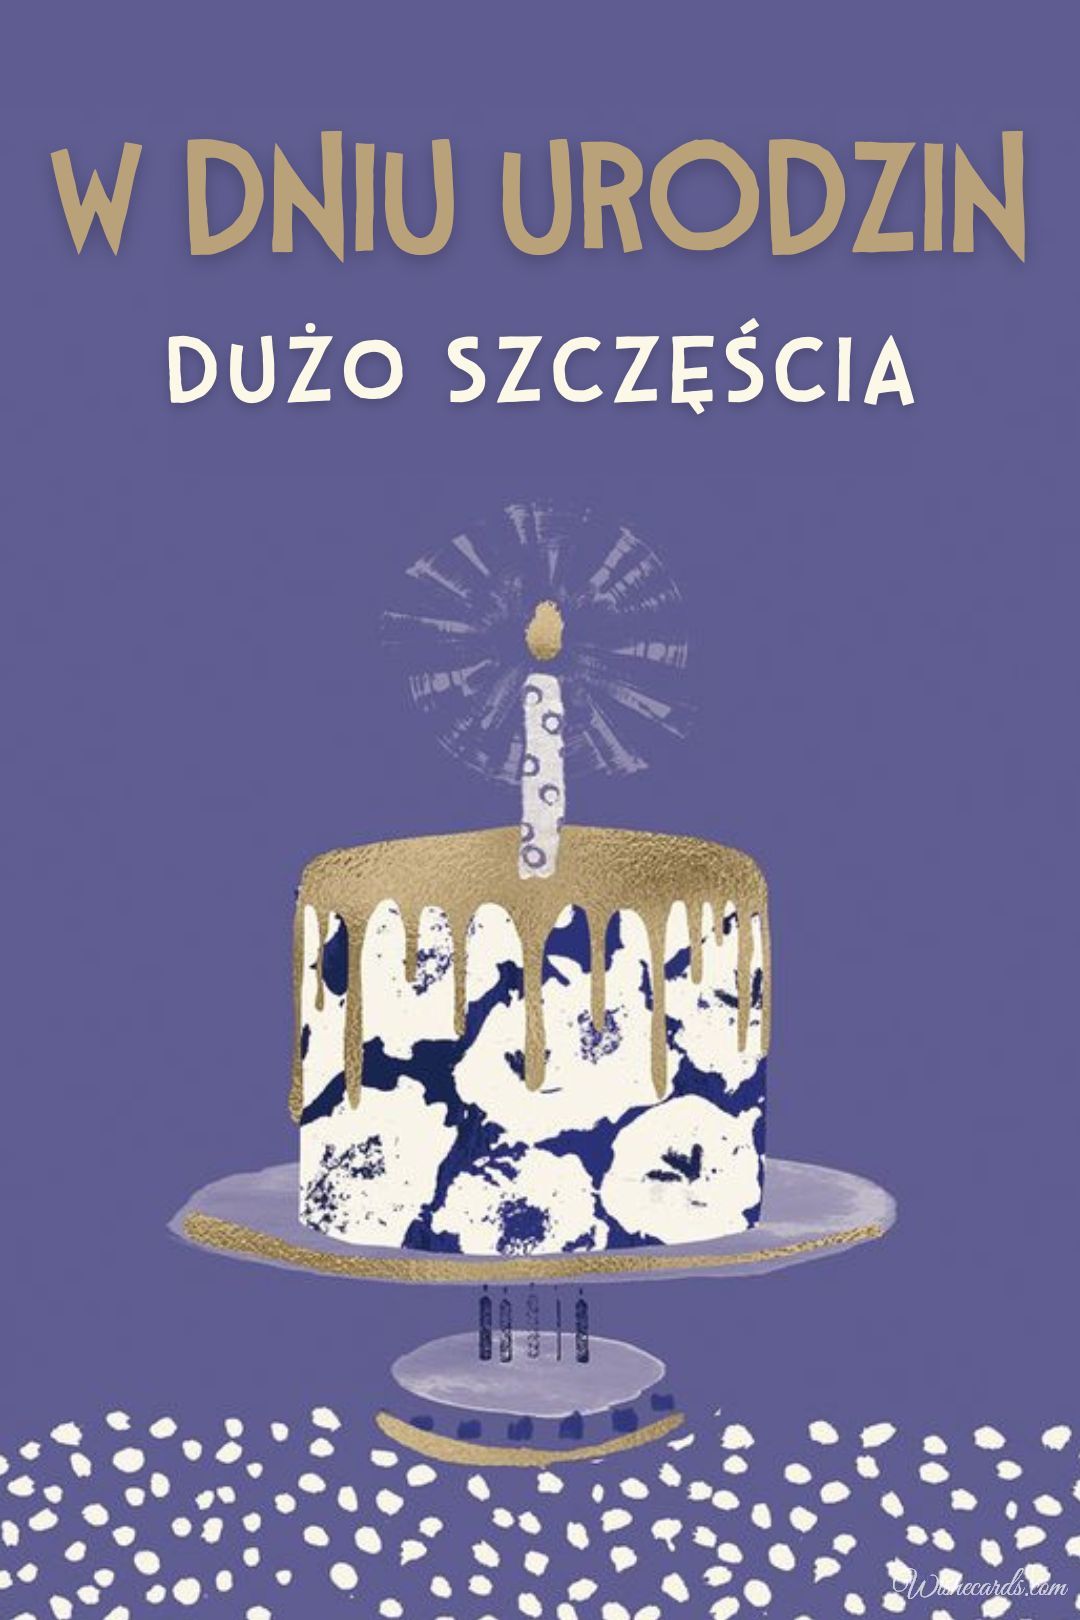 Polish Birthday Card with Cake